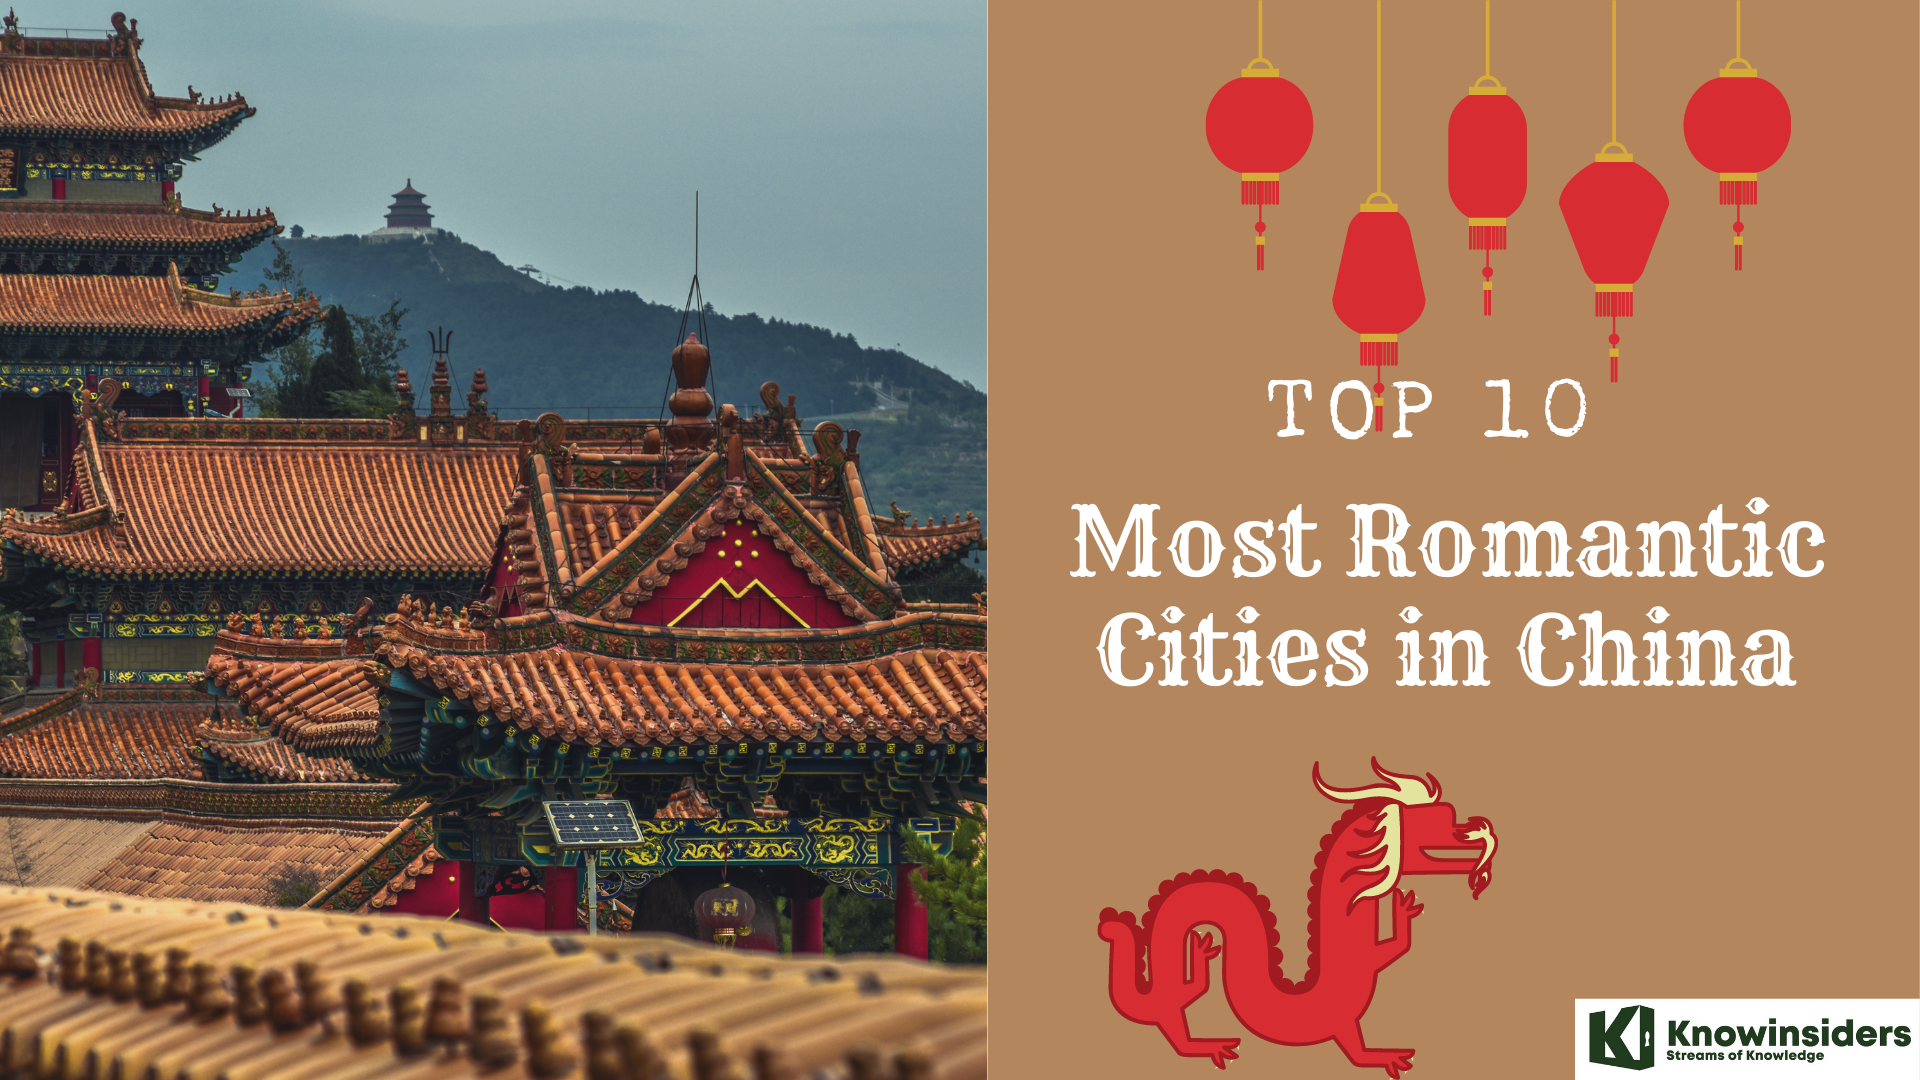 Top 10 Cities for Romantic Honeymoon in China